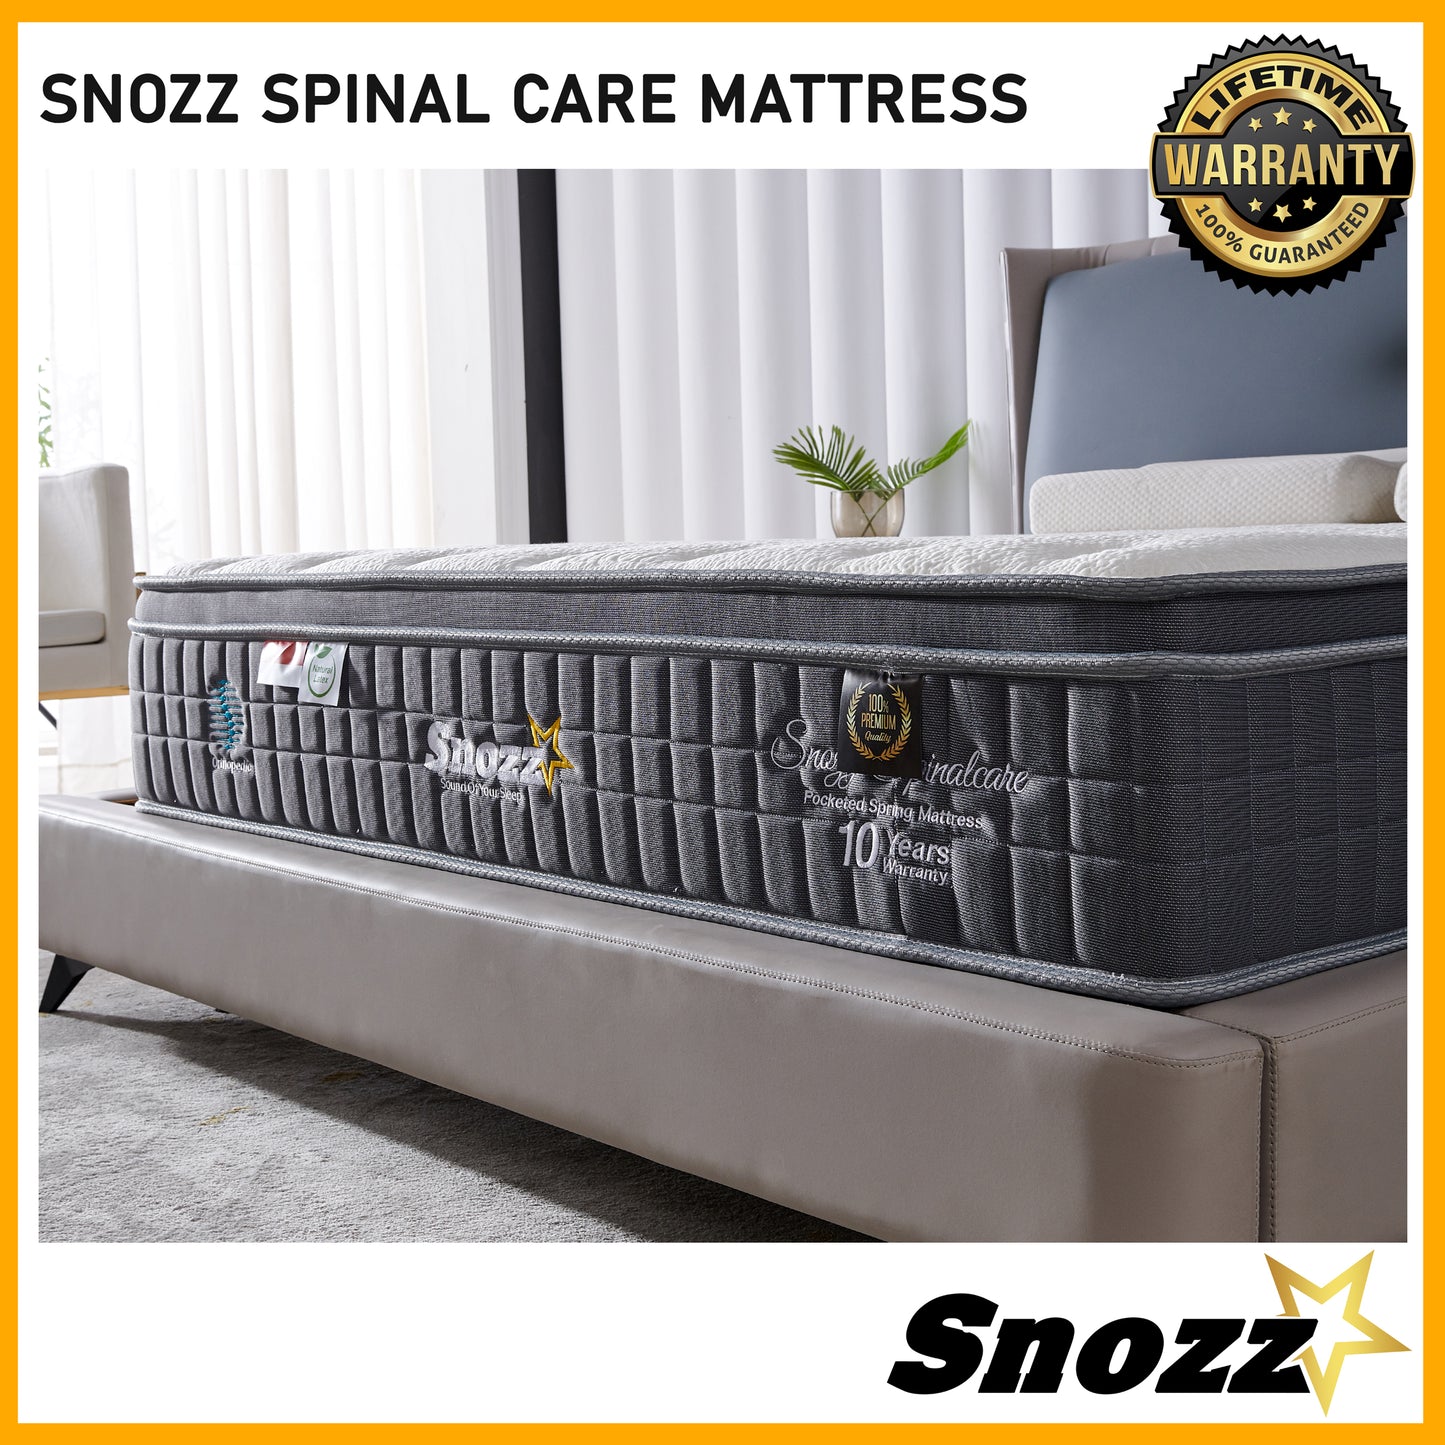 Snozz Spring Mattress | Spinal Care